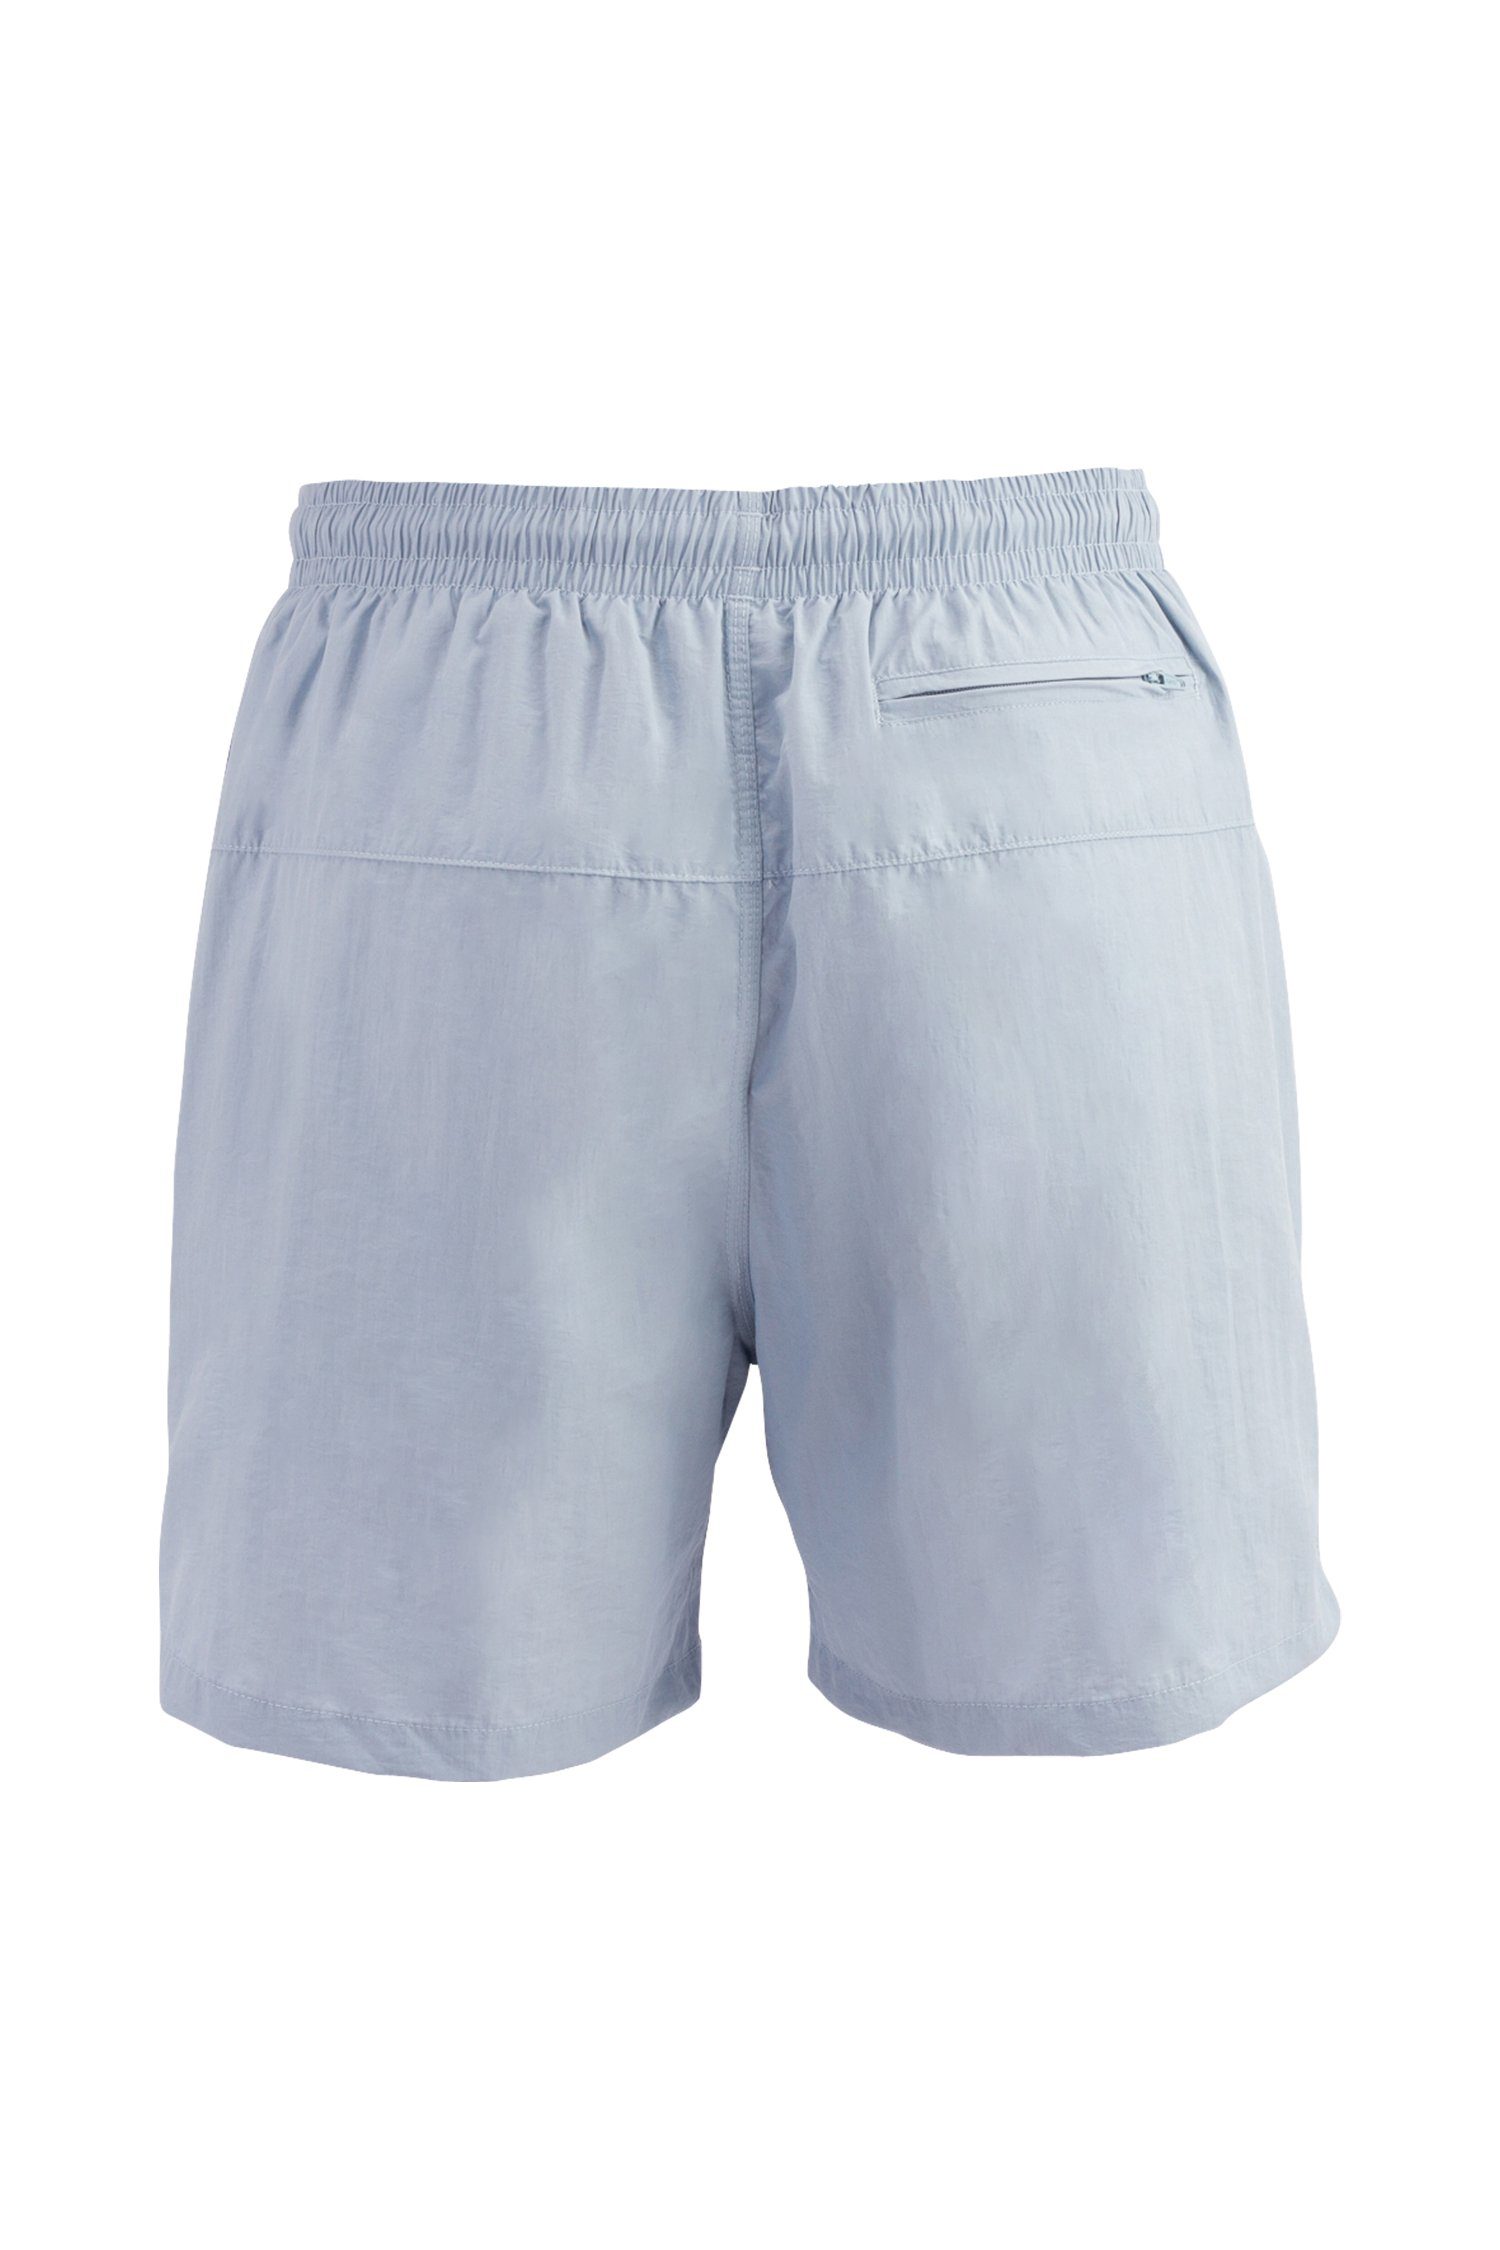 Manufaktur13 Badeshorts Shorts Swim - Sky schnelltrocknend Badehosen Blue